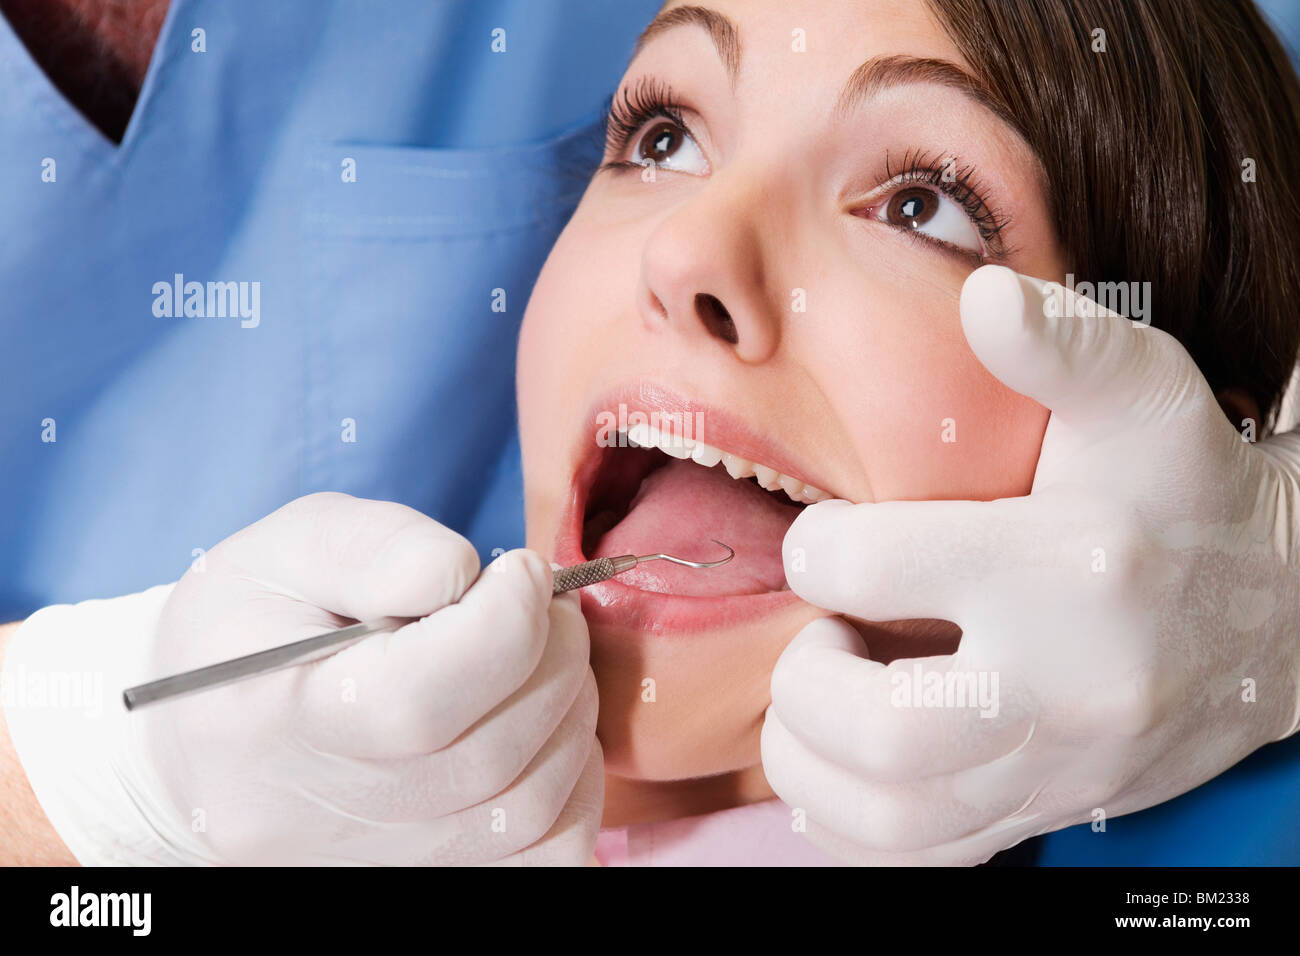 Dentist examining a woman's teeth Stock Photo